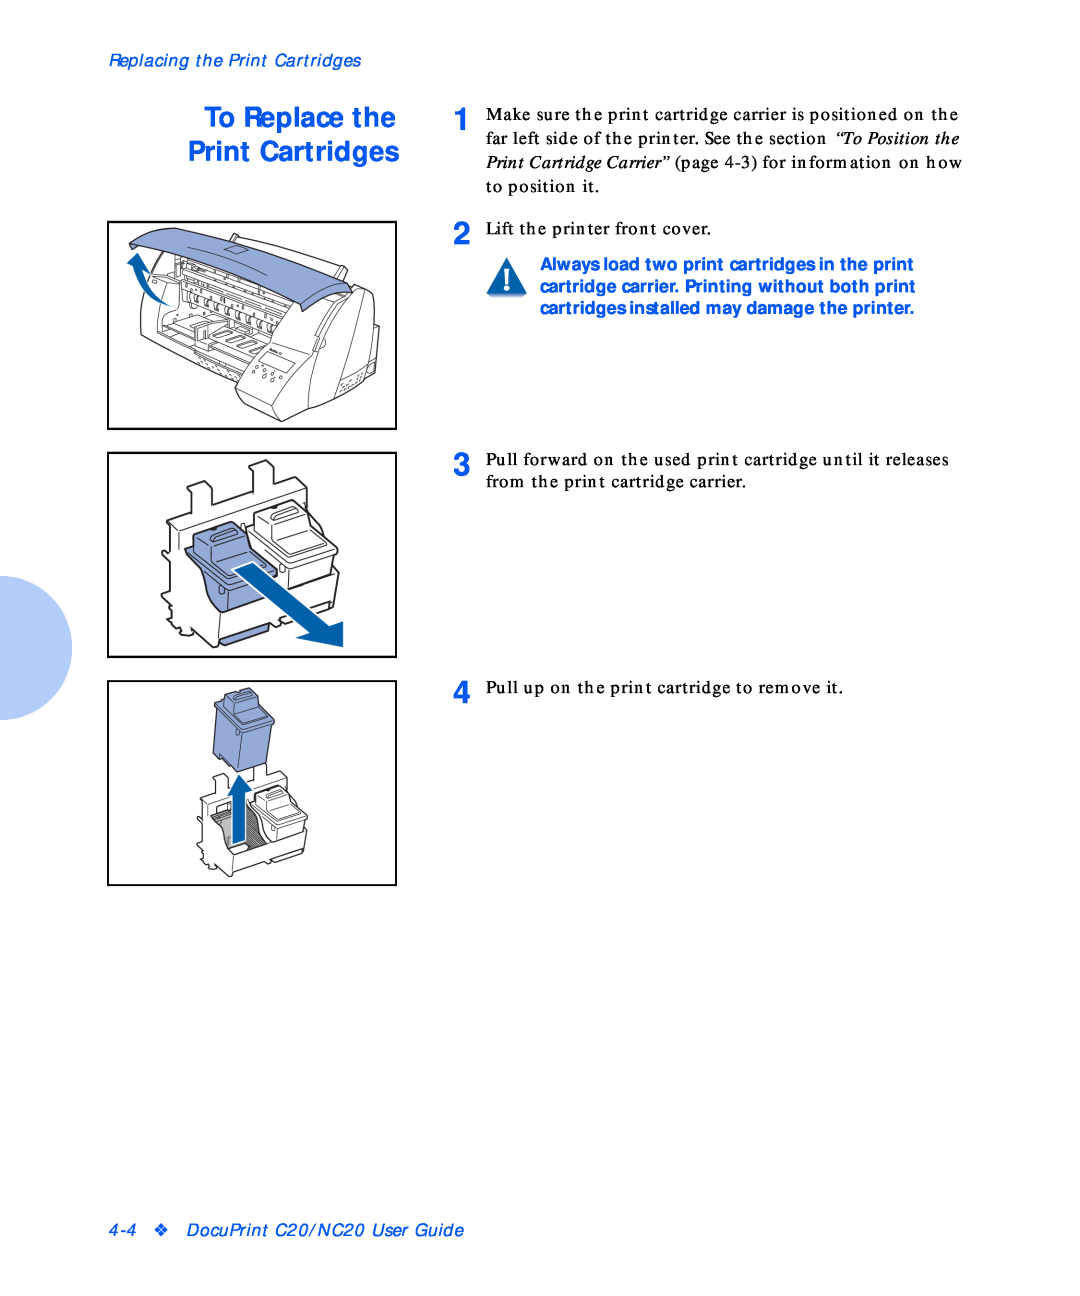 Xerox manual To Replace the, Replacing the Print Cartridges, DocuPrint C20/NC20 User Guide 